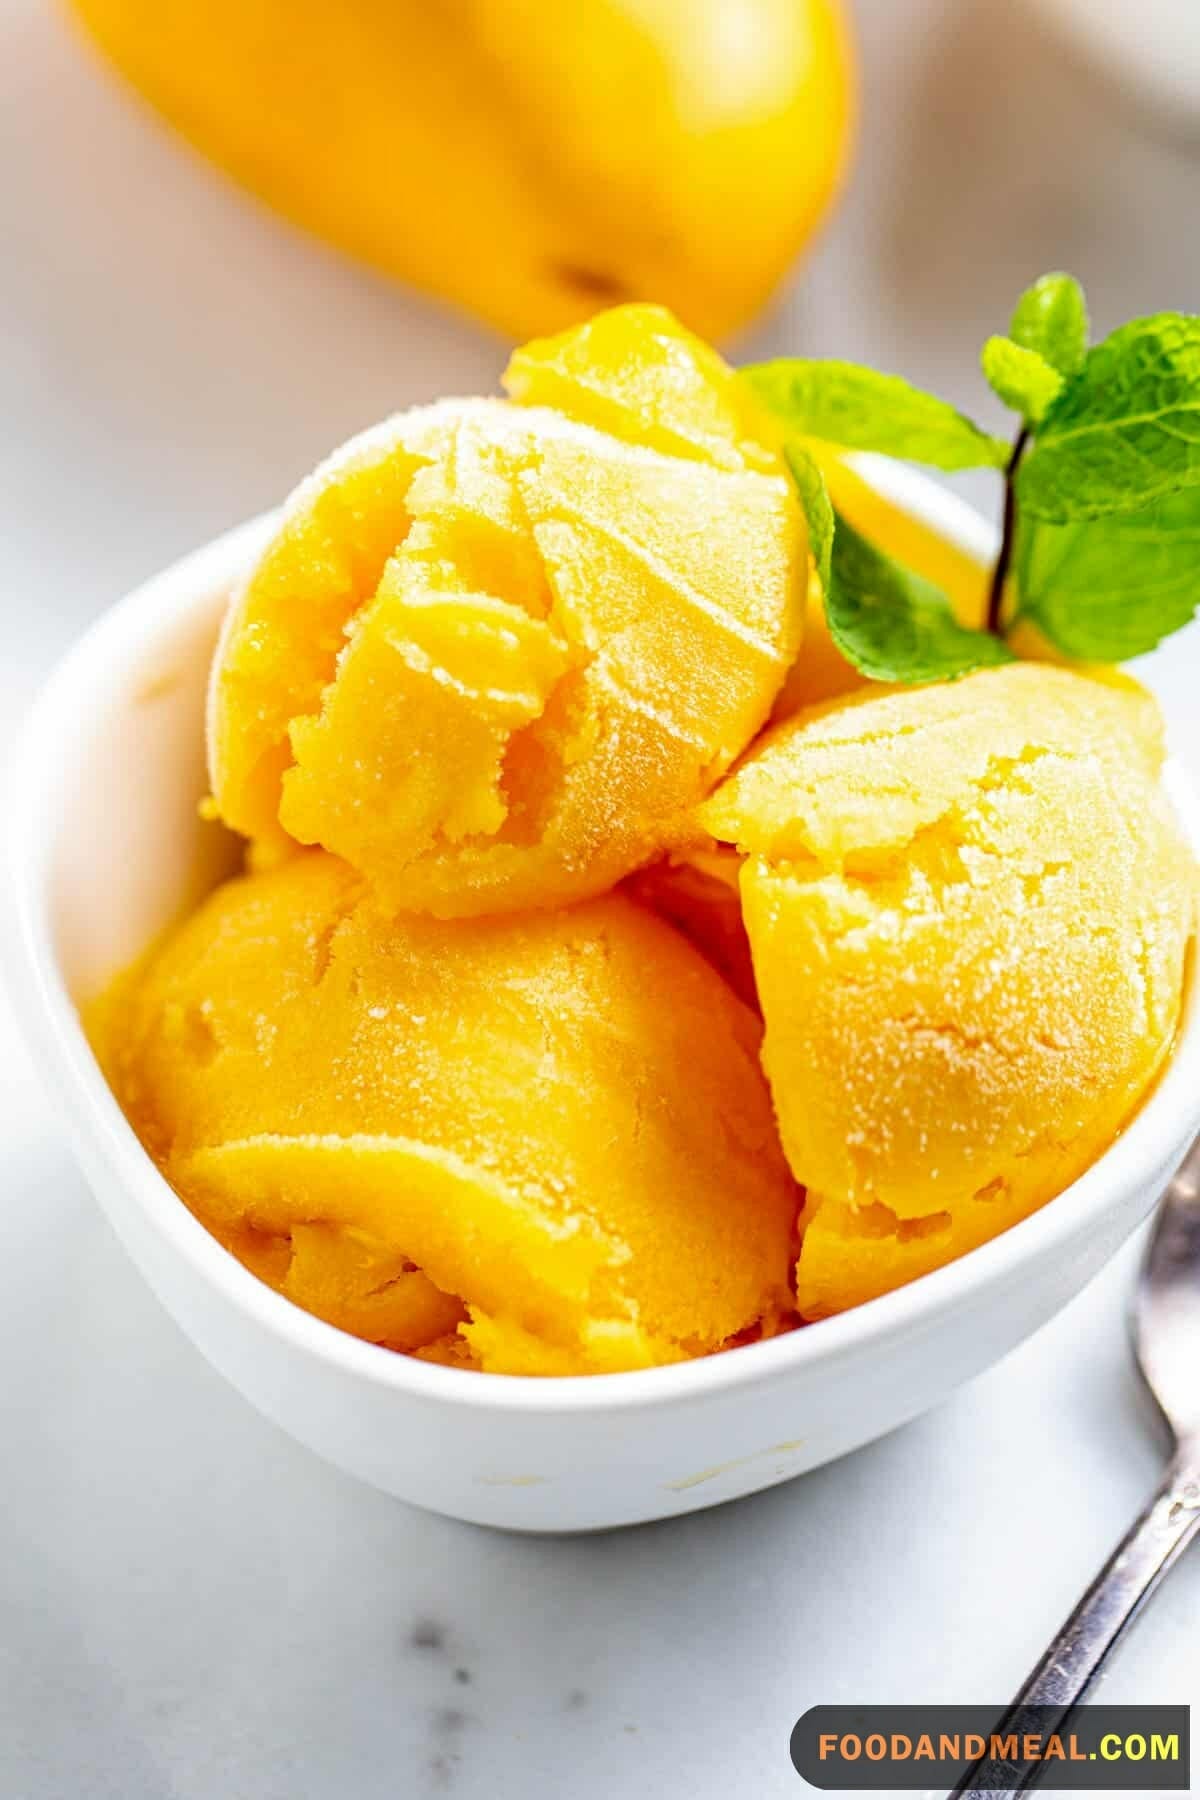 Heavenly Mango Sorbet: Your Summertime Delight Awaits! 4